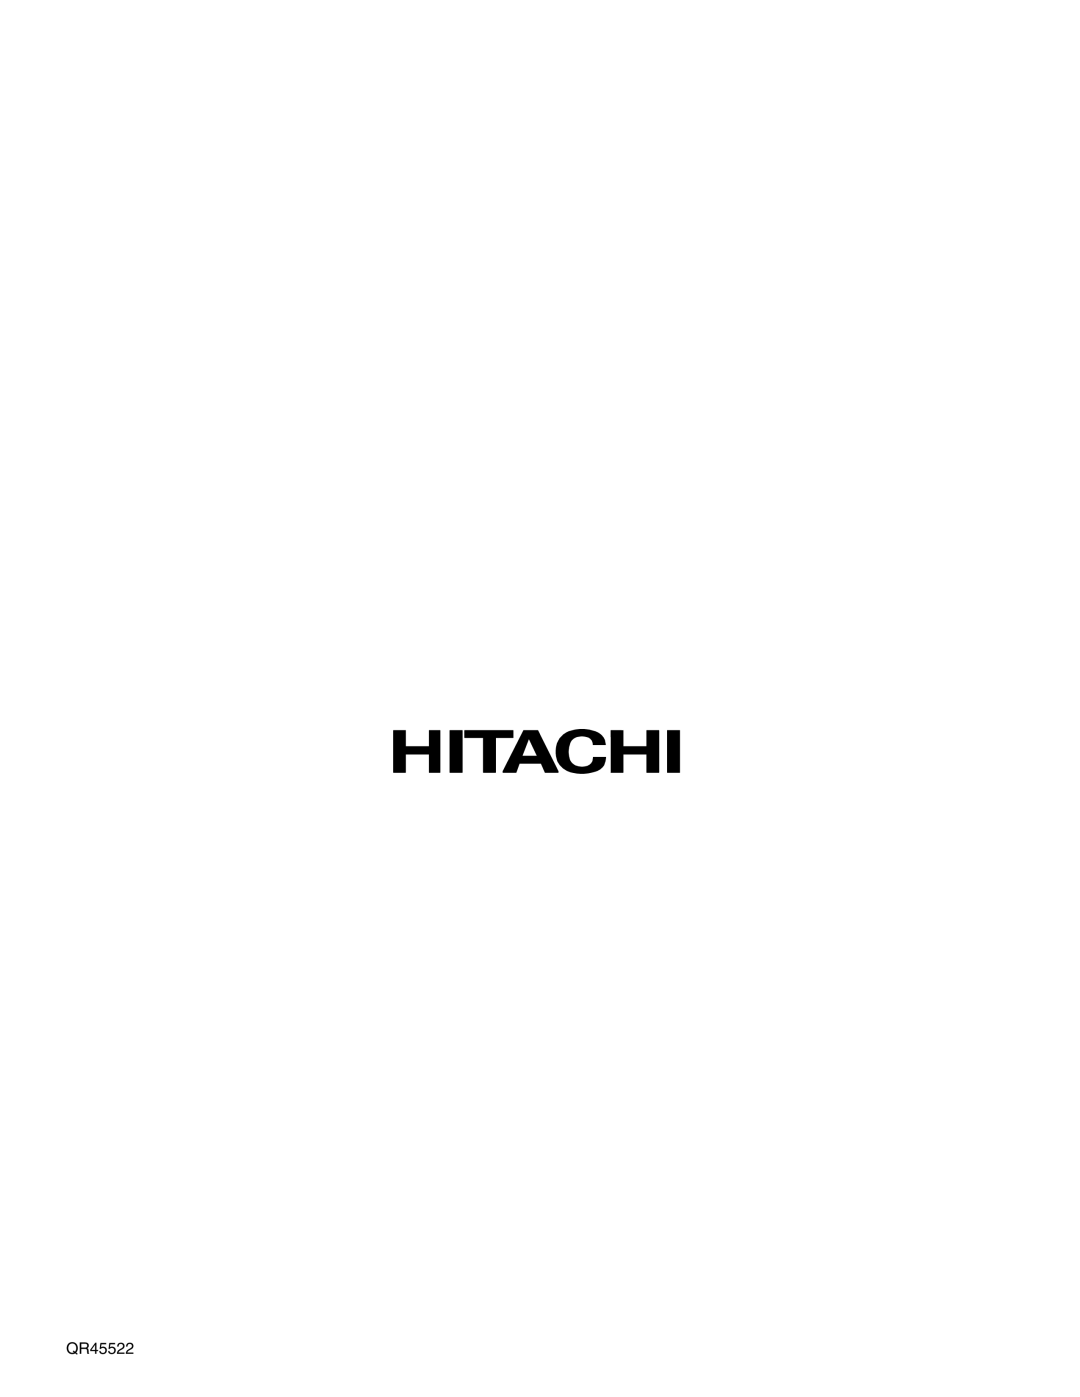 Hitachi 53SWX01W manual QR45522 